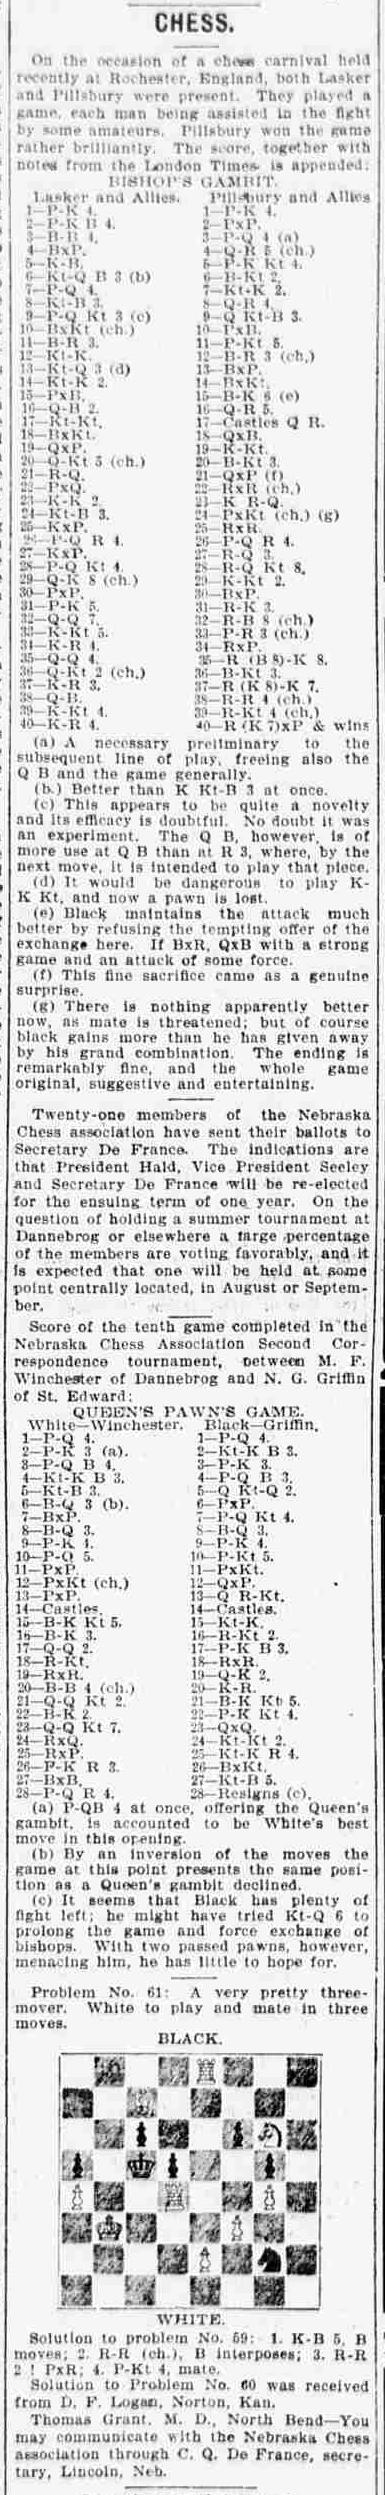 1899.06.11-01 Omaha Daily Bee.jpg